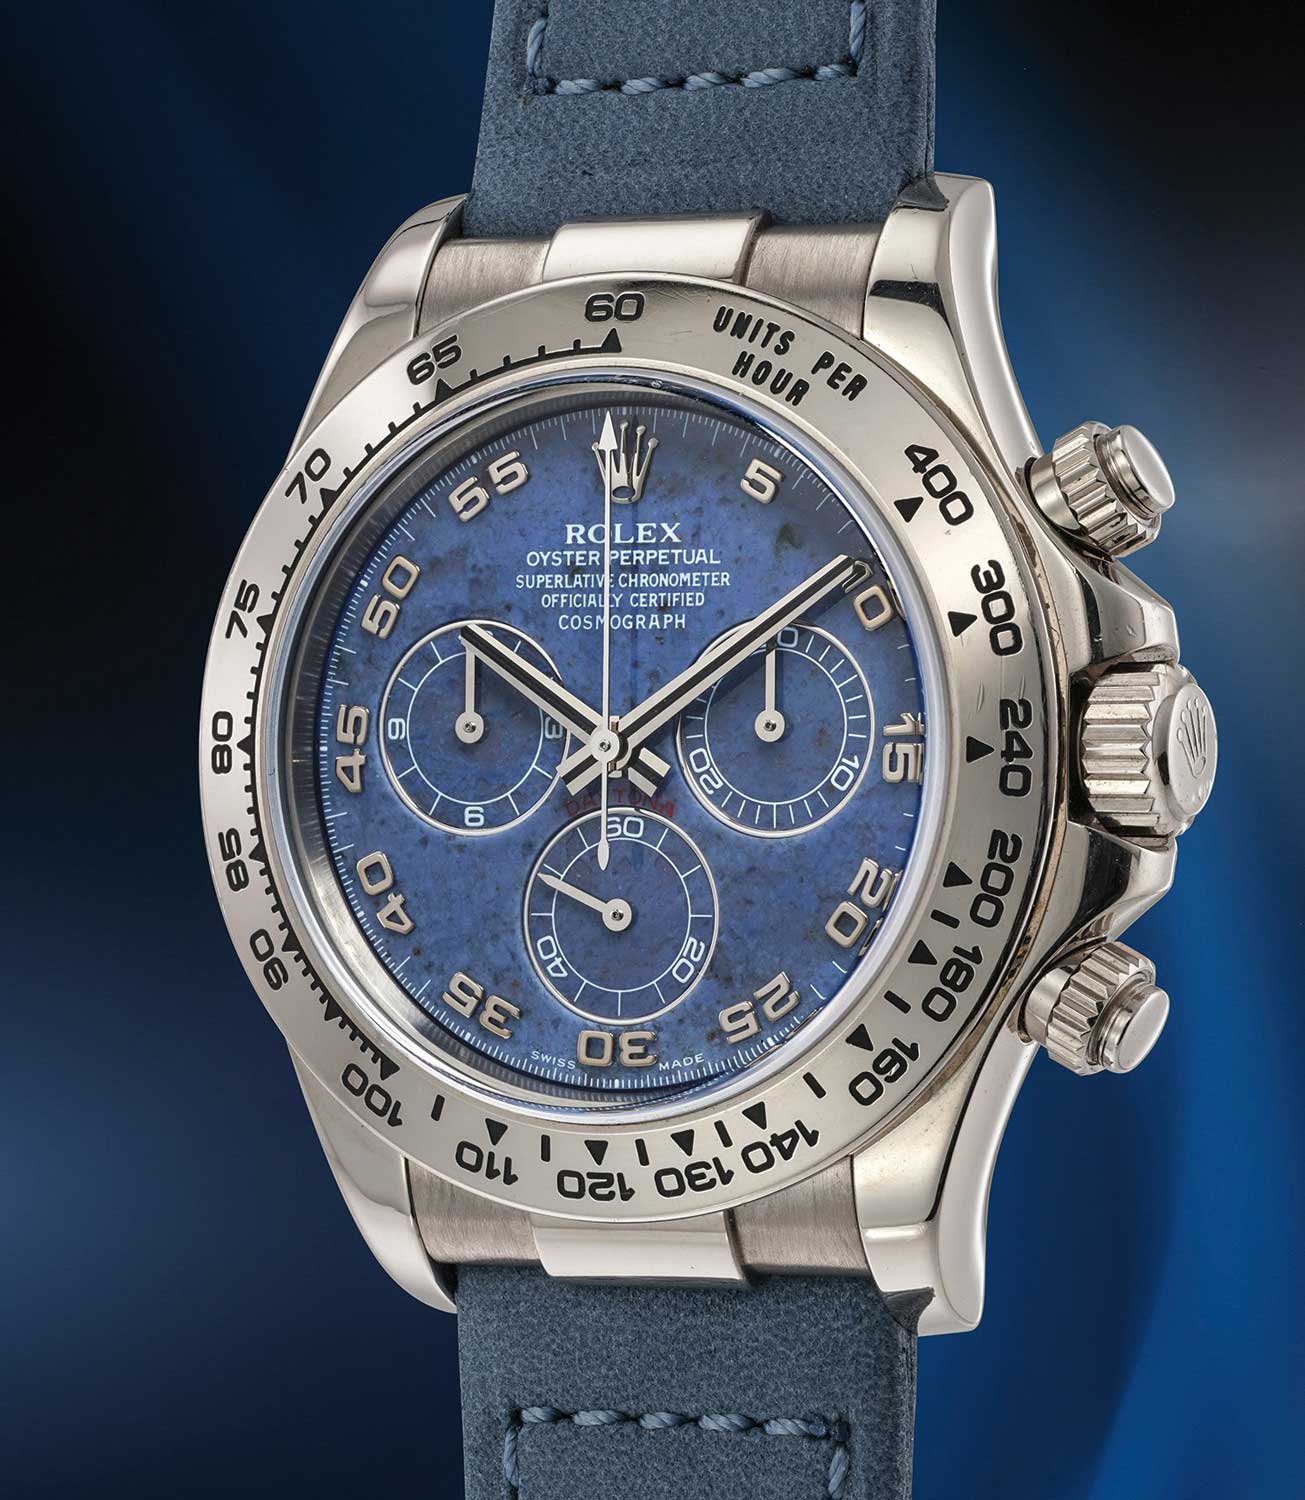 Lot 220: Rolex Ref. 116519 (Image: Phillips Watches)